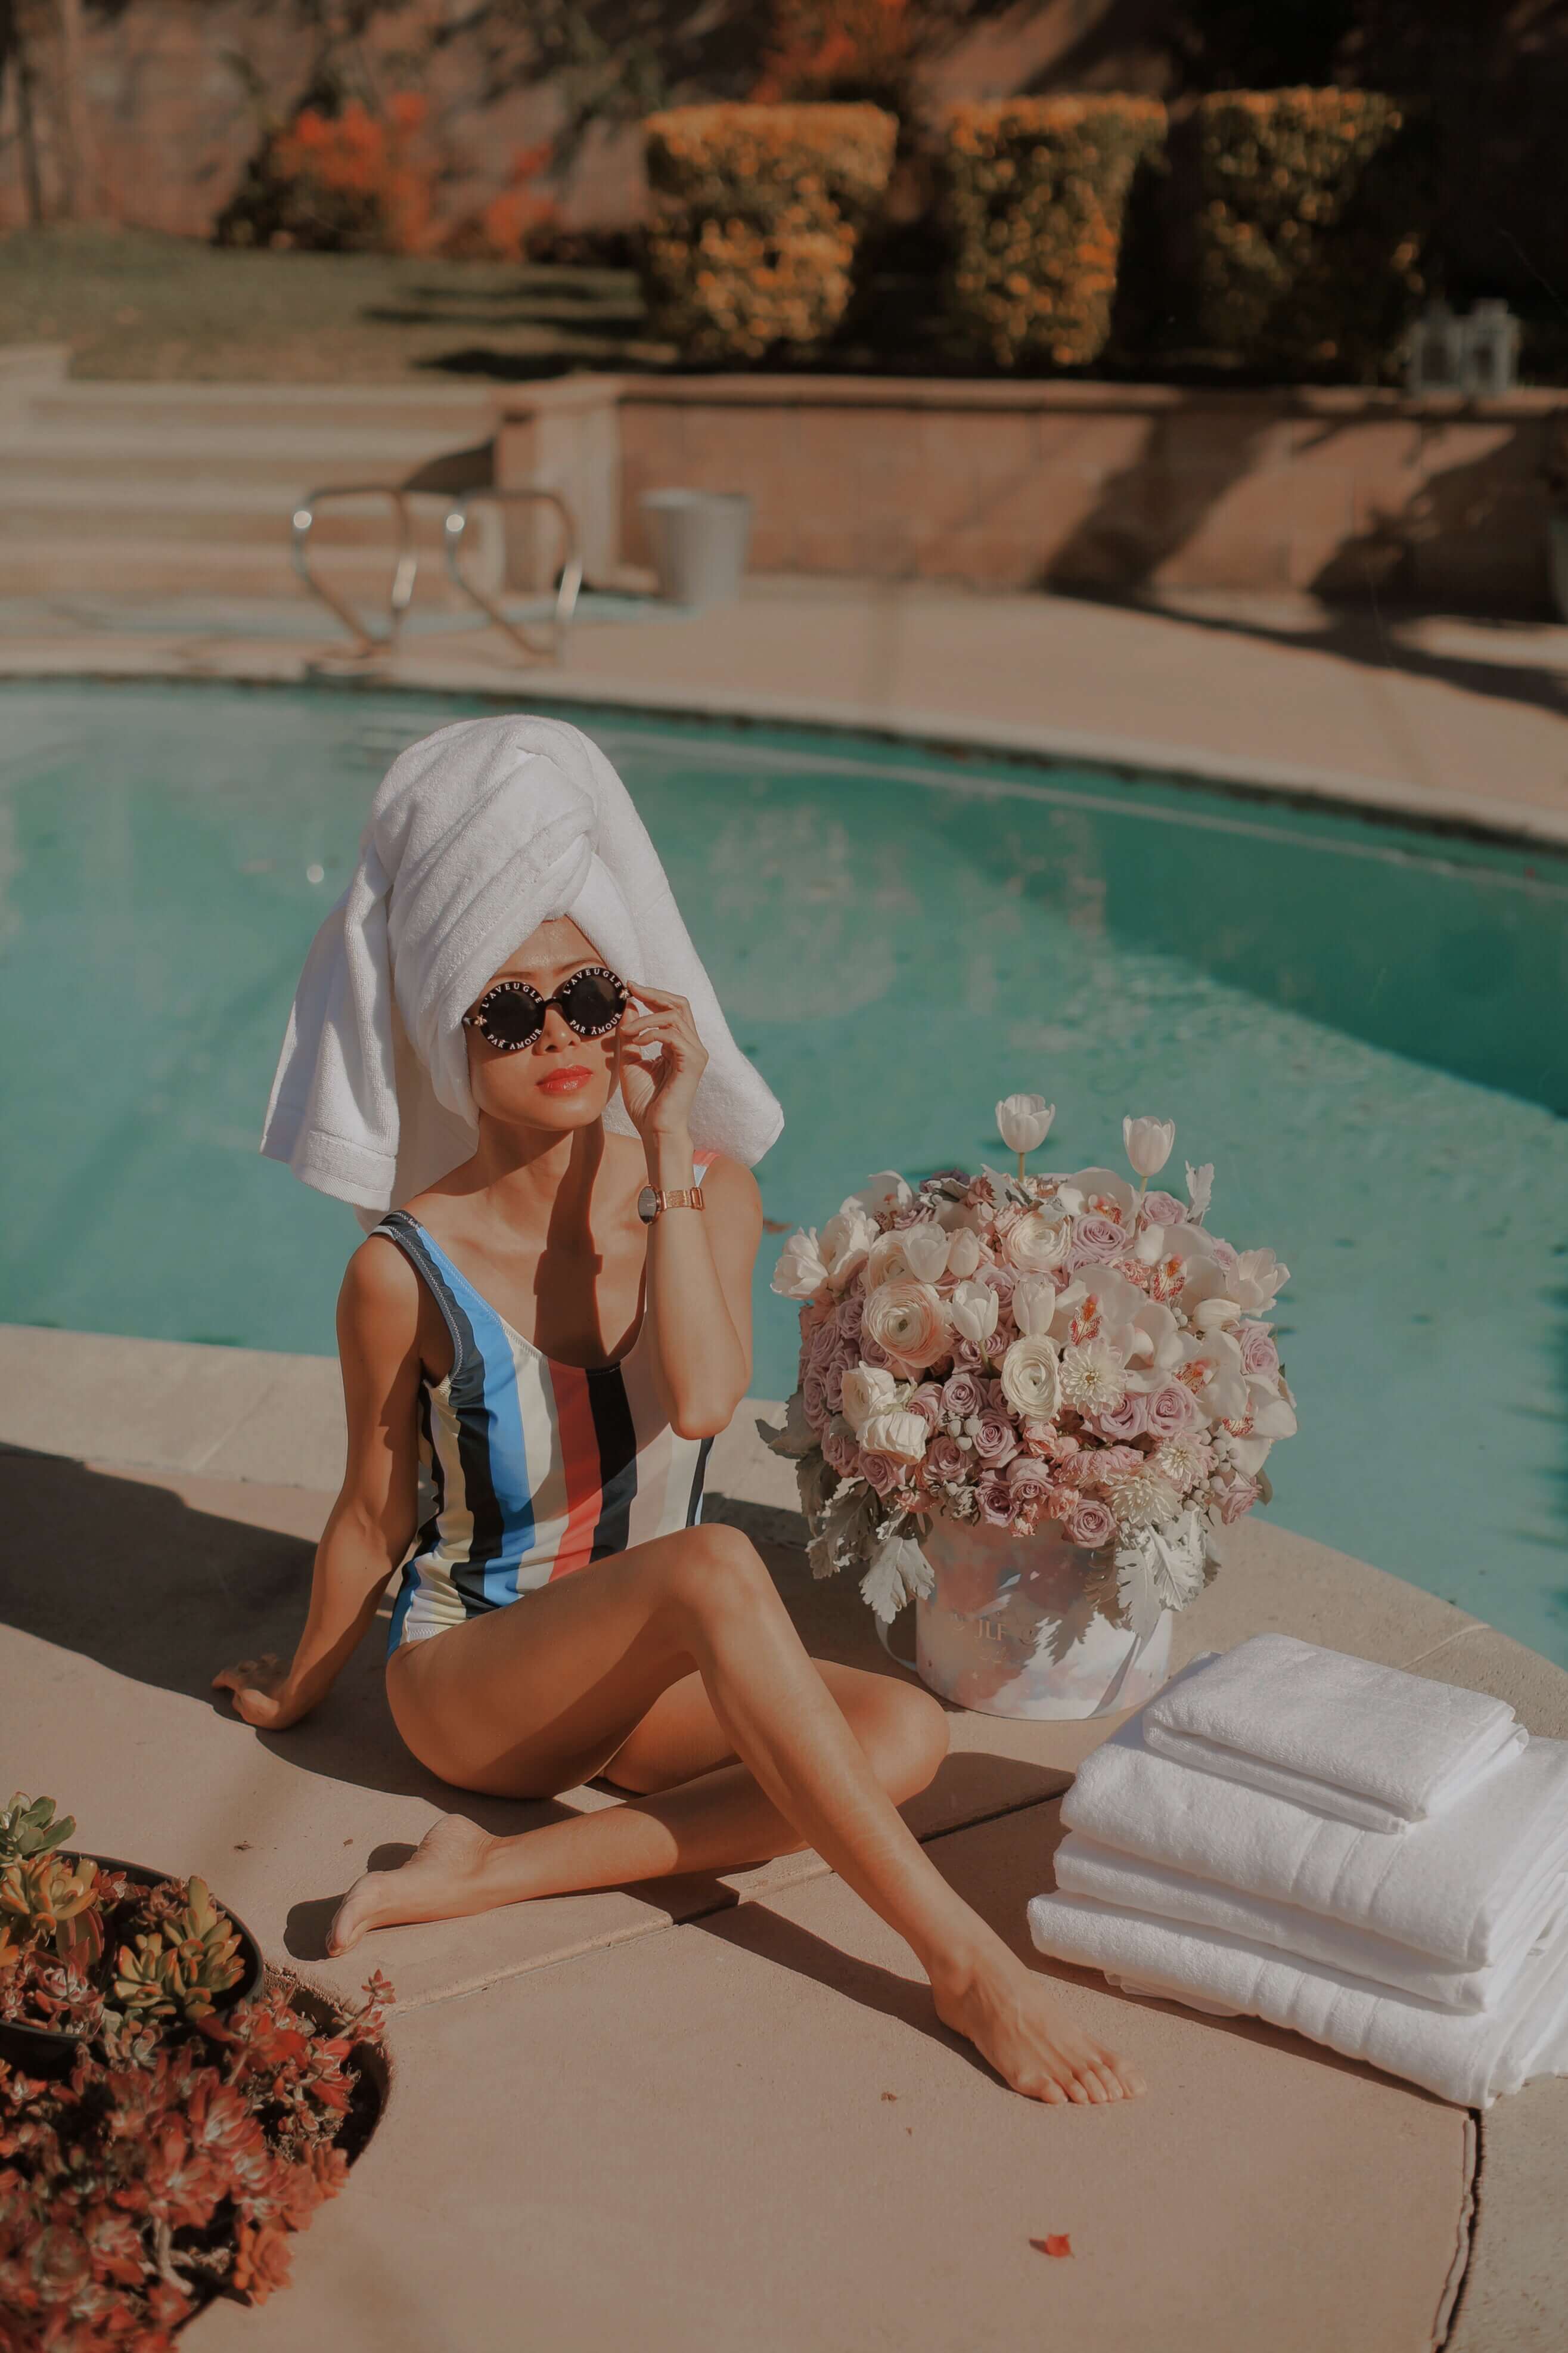 Brooklinen Super-Plush Towels - Set of 2, Smoke Gray, 100% Cotton|Best  Luxury Spa Towels